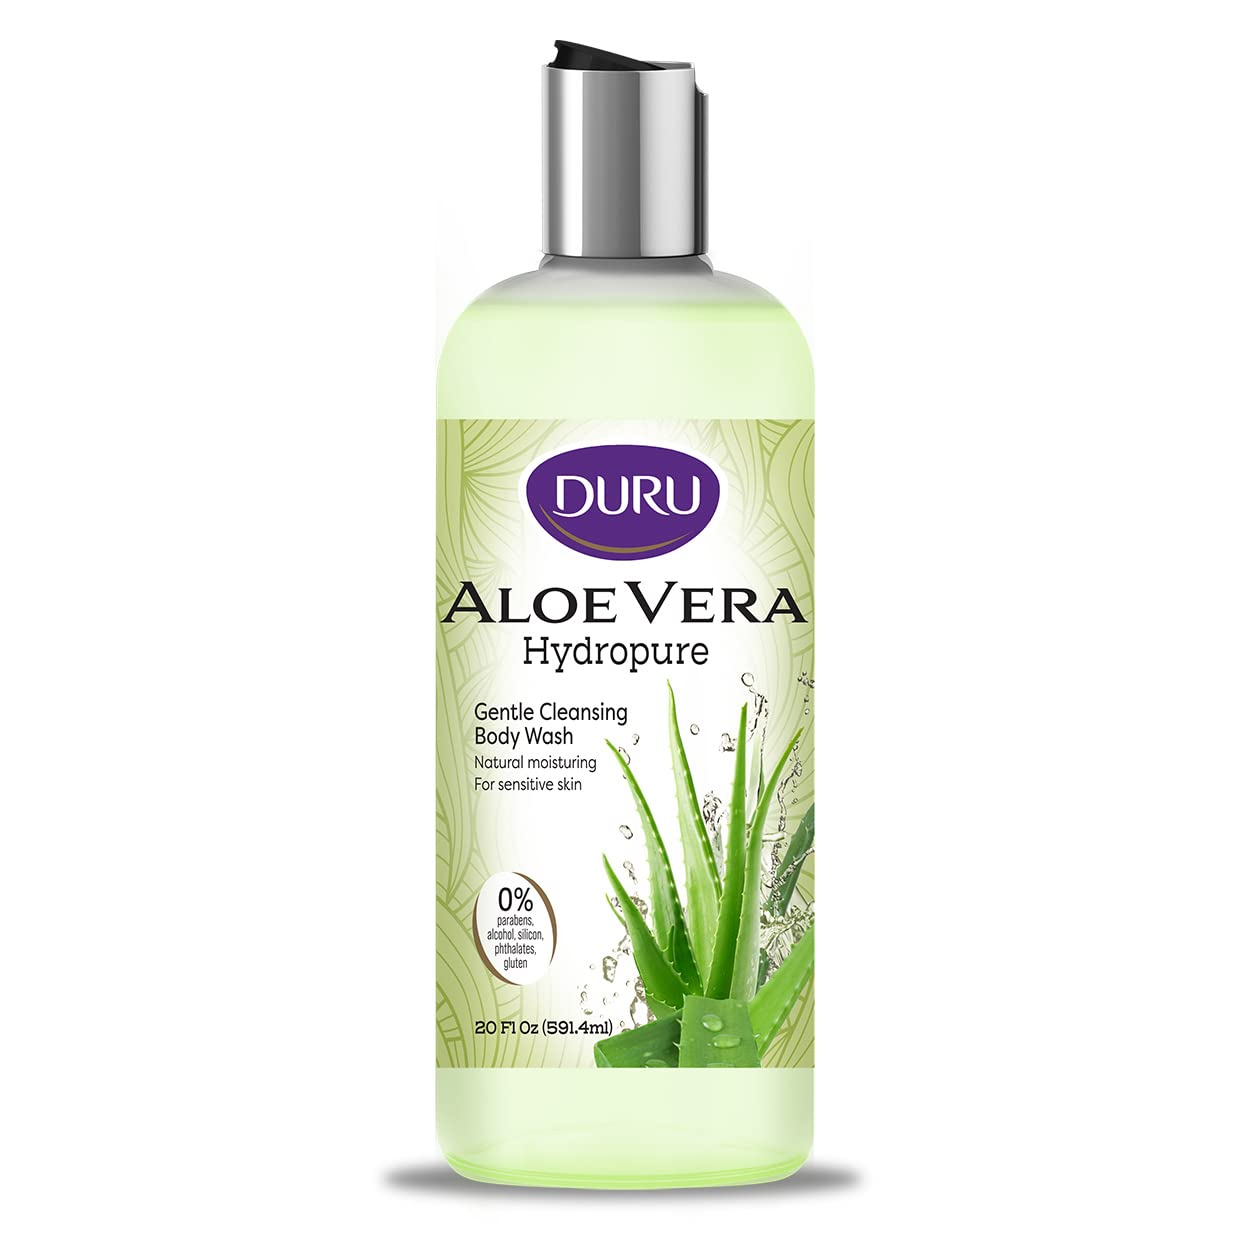 Duru Aloe Vera Body Wash - Gentle Cleansing Moisturizing Sensitive Skin Shower Gel Paraben Free Alcohol Free Silicone Free Phthalete Free Gluten Free Body Wash